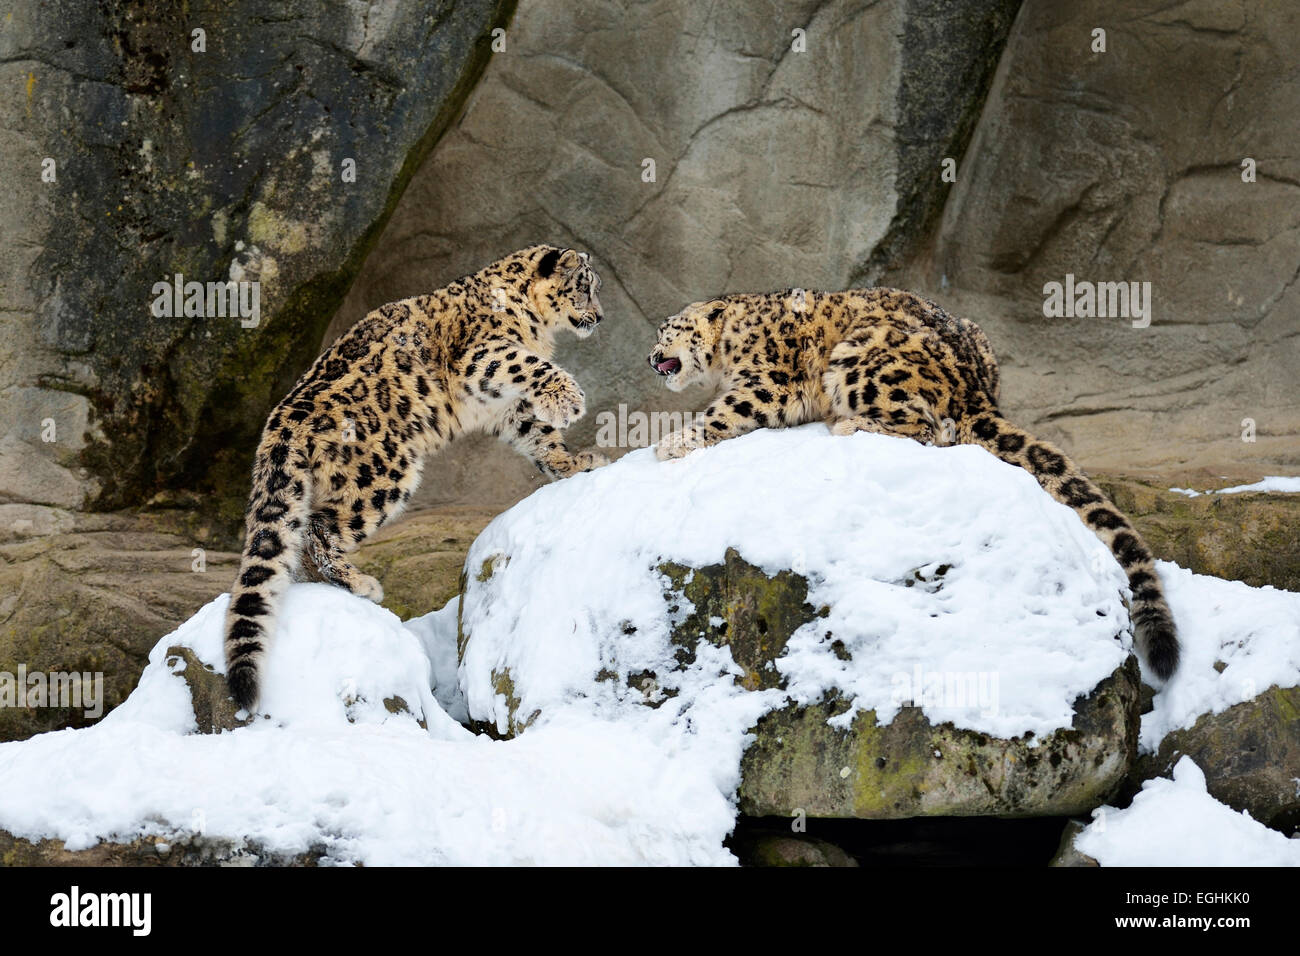 Young Snow Leopards (Panthera uncia) playing, captive, Switzerland Stock Photo